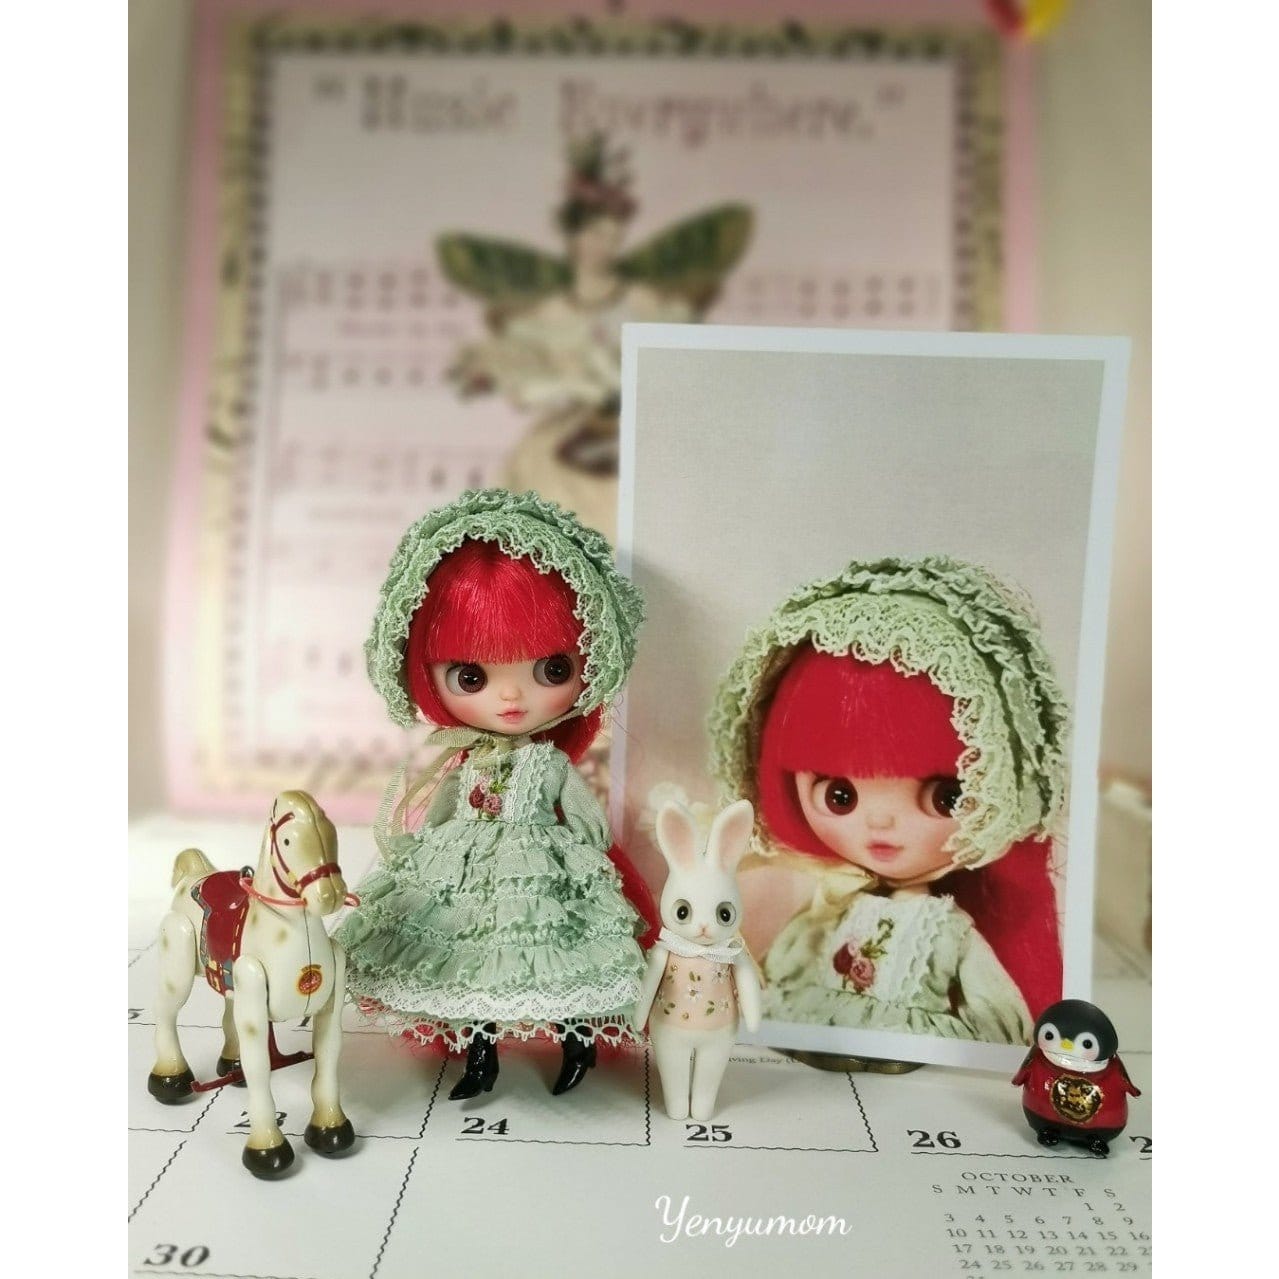 【Yenyumom】Green Lace Dress Set / Petite Blythe